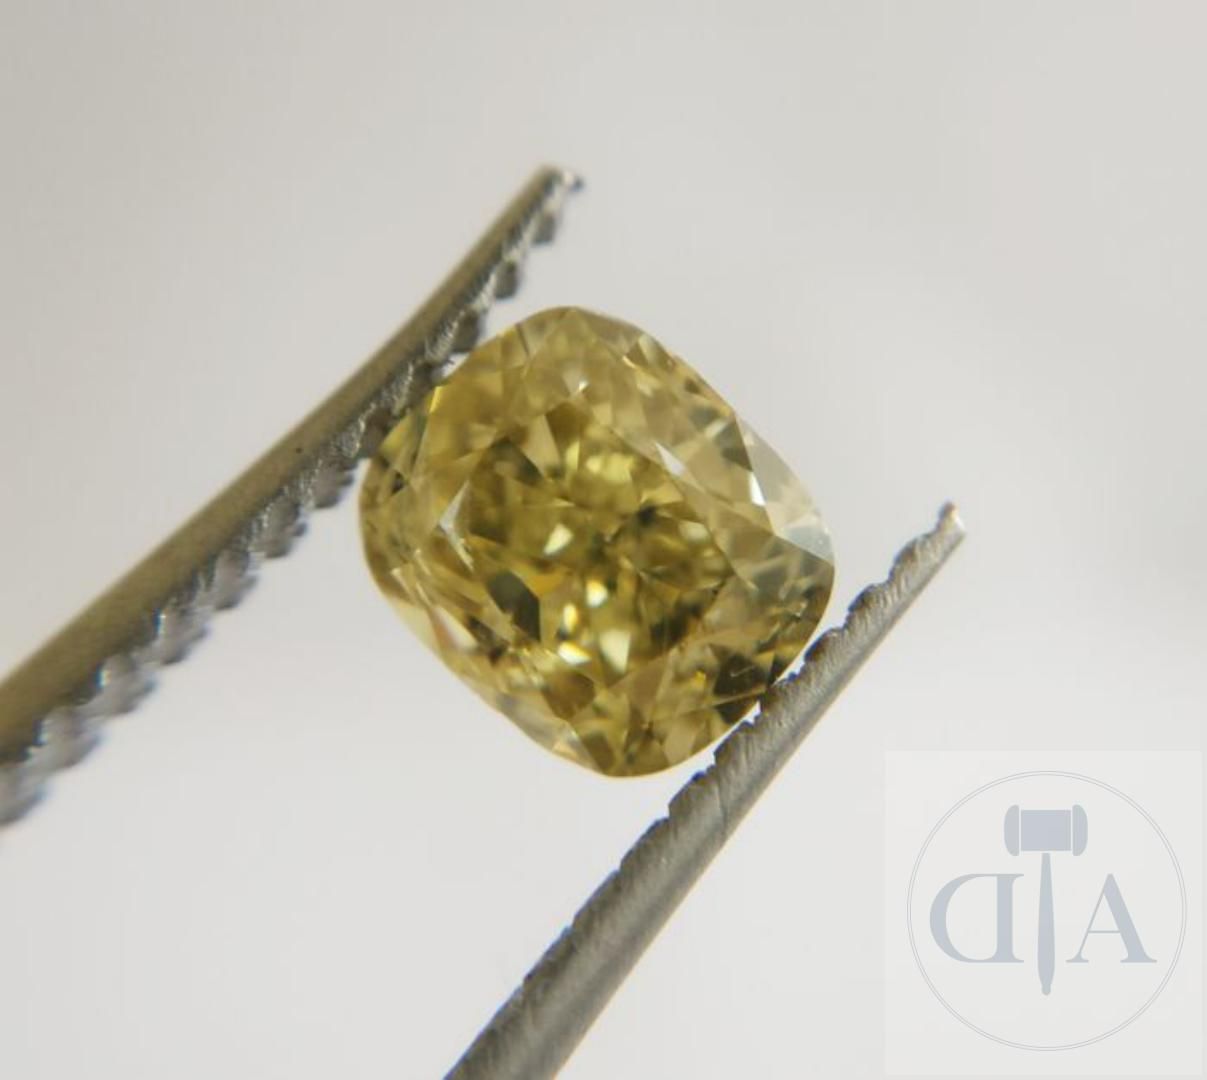 Null " Diamante 1.01ct Certificado GIA- Certificado GIA No. 2175579852 
- Forma:&hellip;